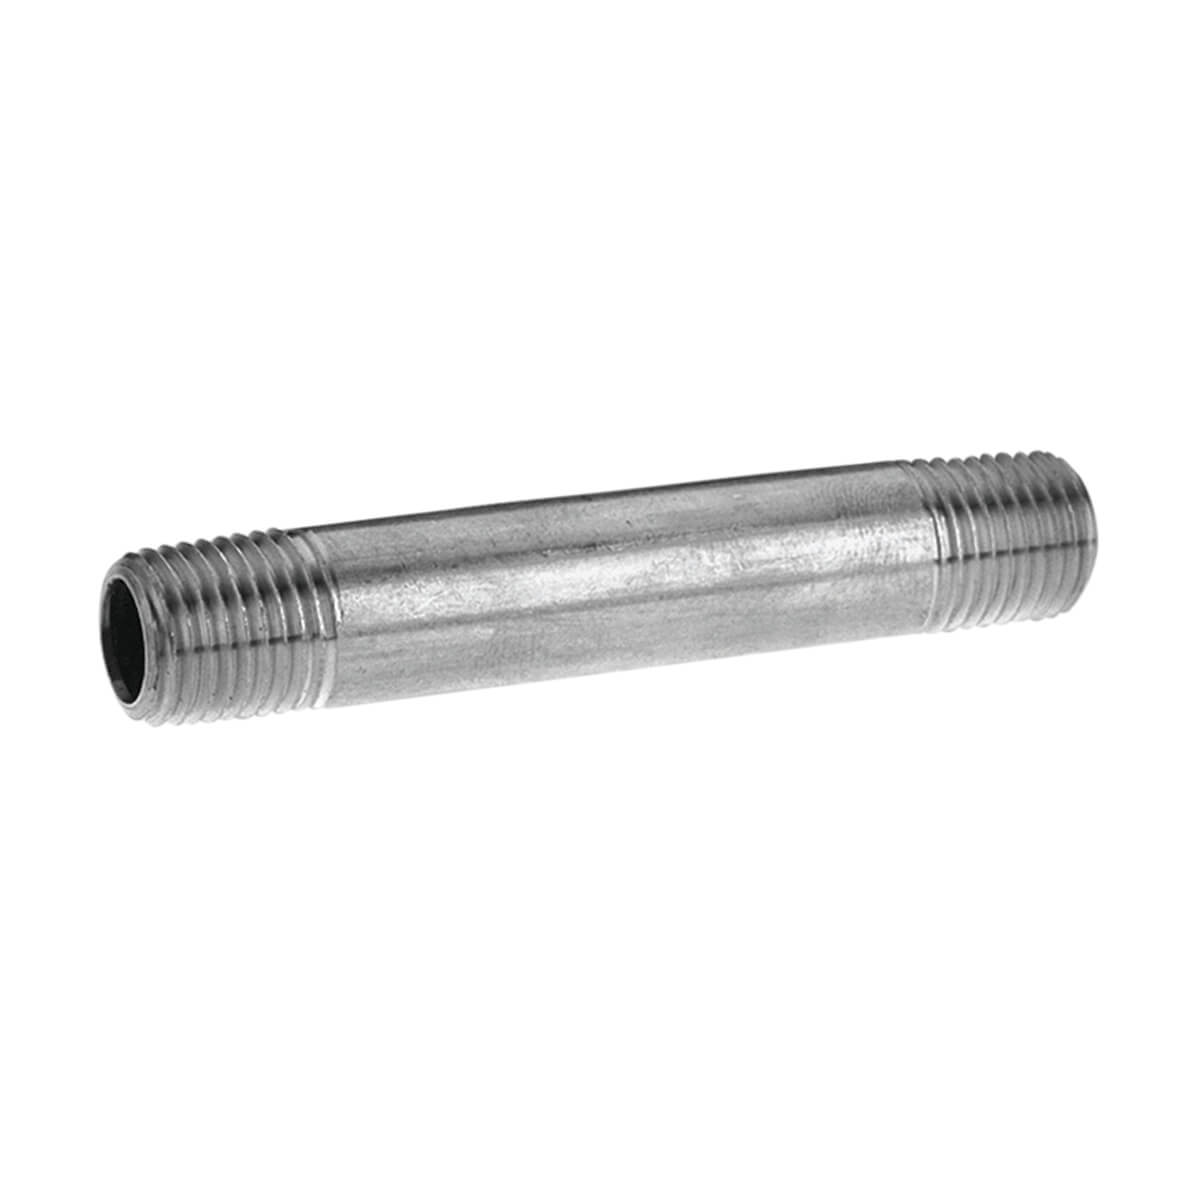 Pipe Nipple Galvanized Steel - 1/2-in x 2-in